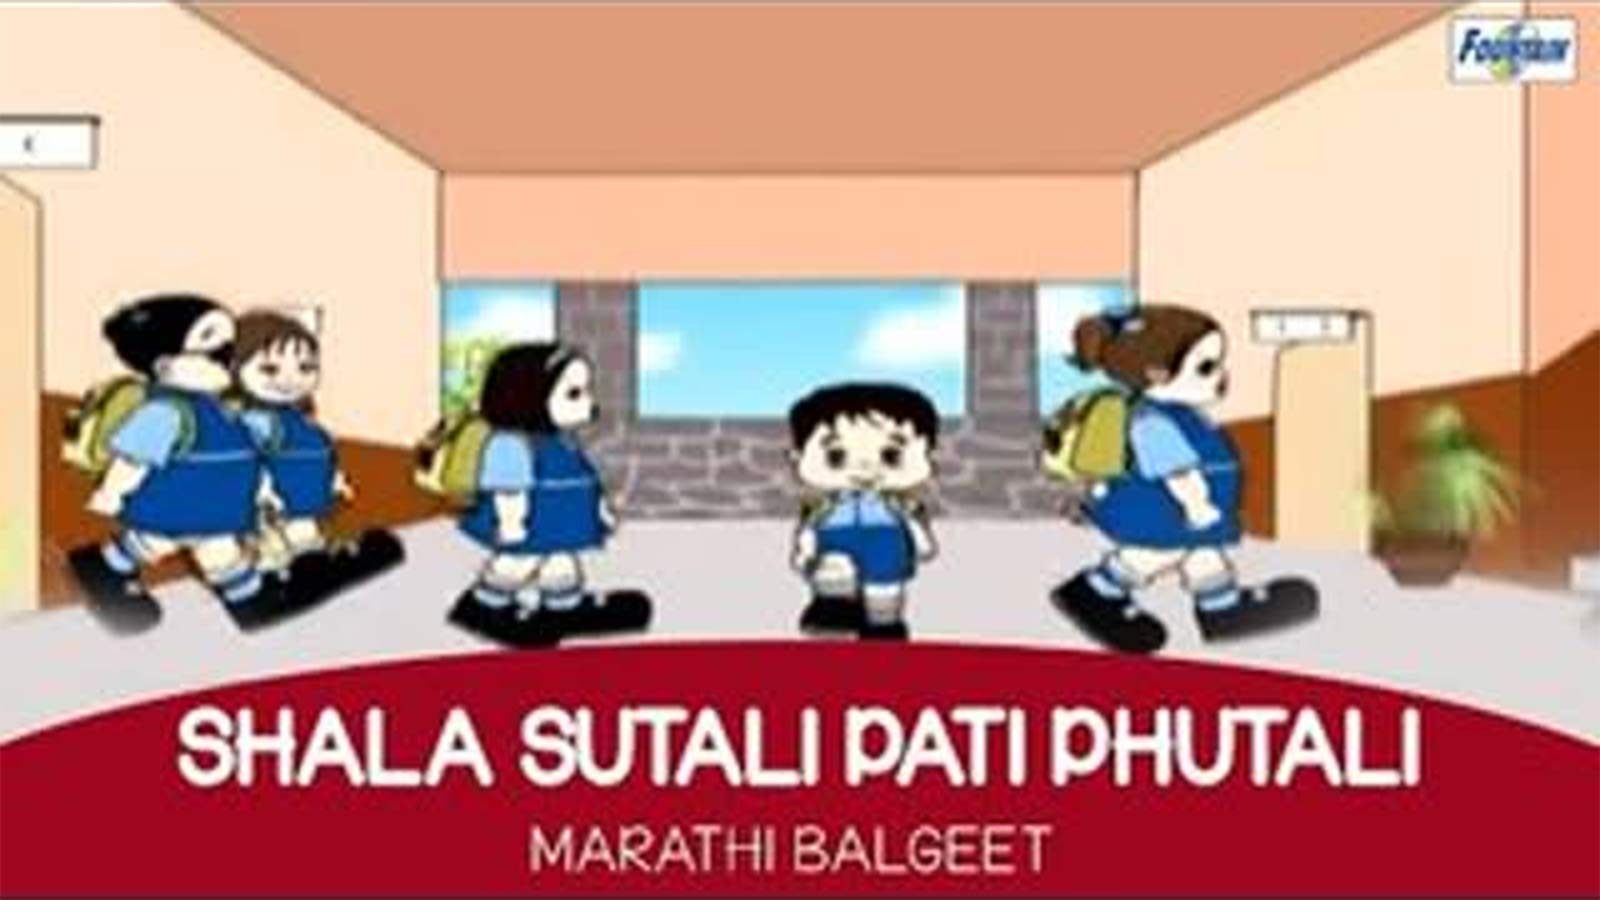 Kids Popular Song In Marathi 'Shala Sutali Pati Phutali' - Marathi Balgeet  For Kids | Entertainment - Times of India Videos